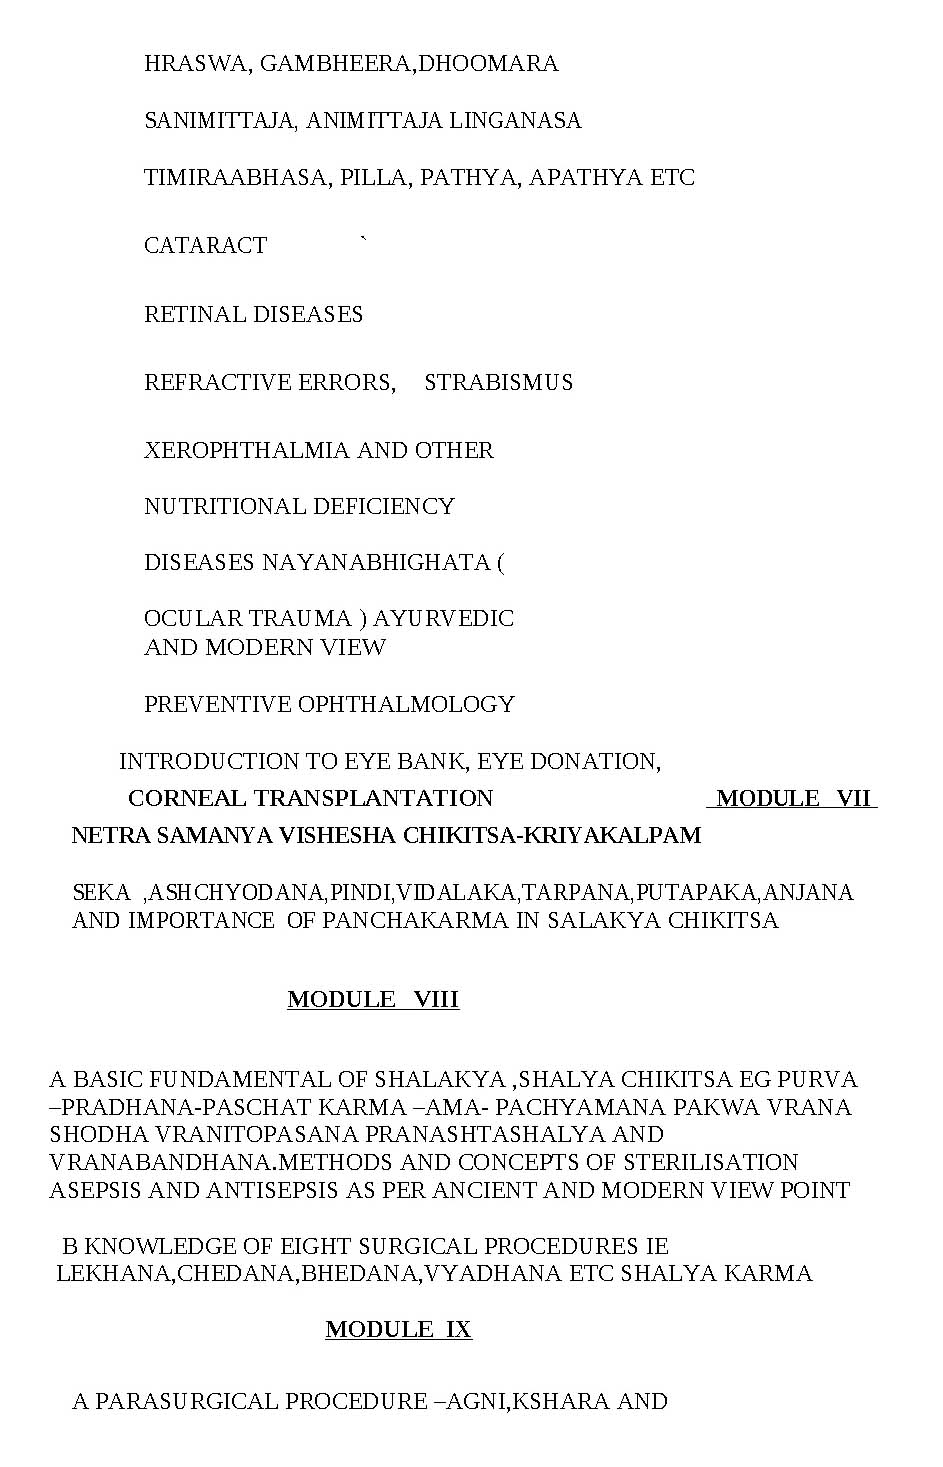 Kerala PSC Syllabus 2019 Medical Officer Netra - Notification Image 5